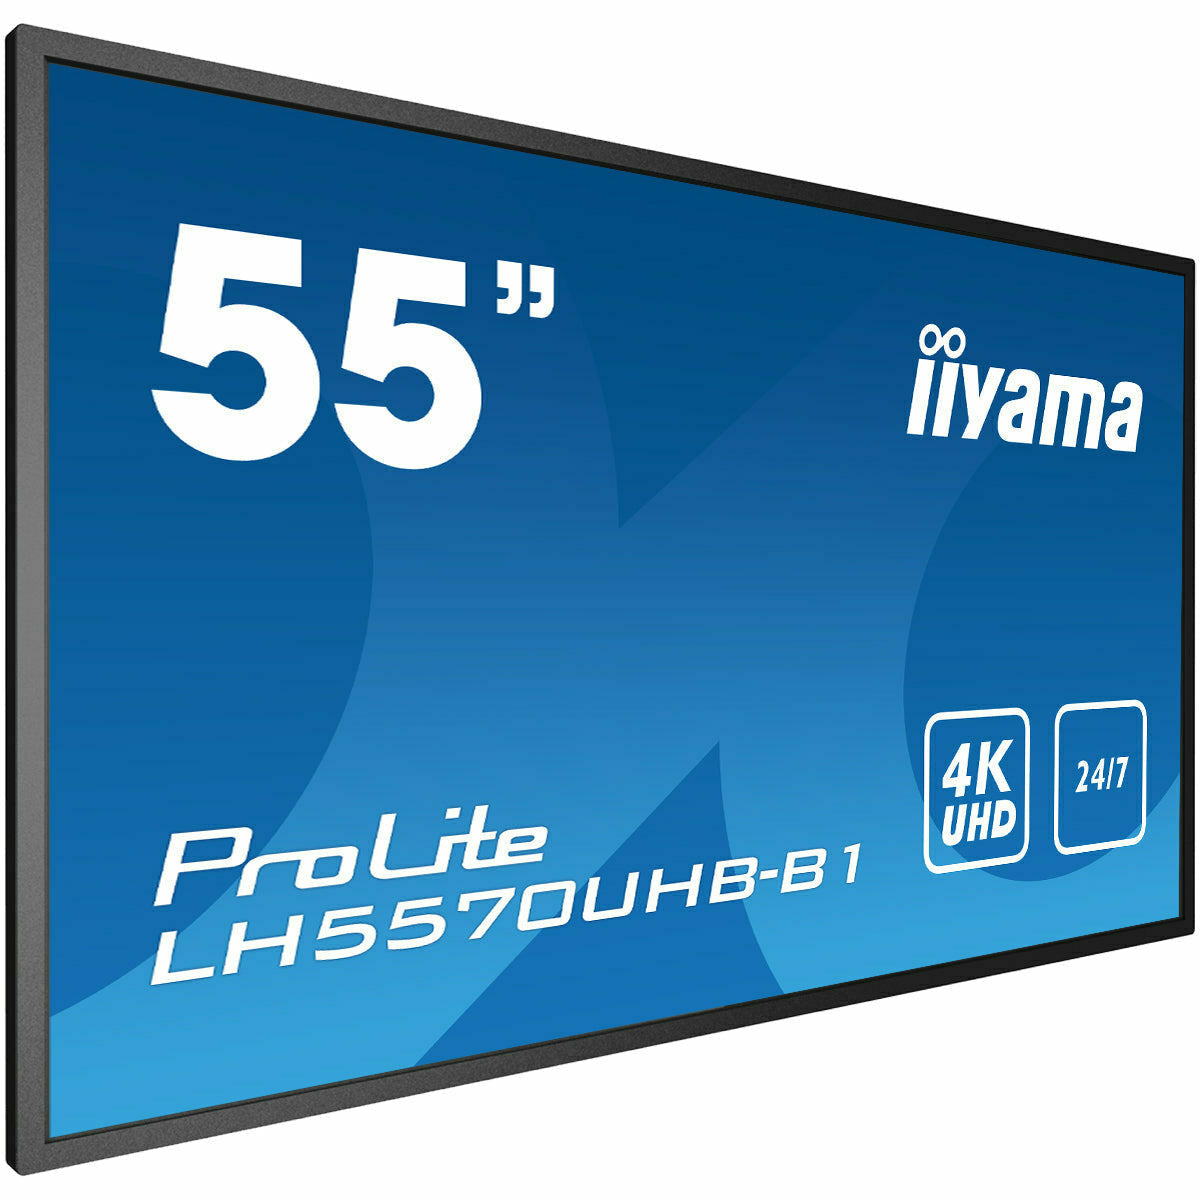 iiyama ProLite LH5570UHB-B1 55" Large Format Display with 24/7, 4K UHD, Android 9.0 and 700cd/m² High Brightness